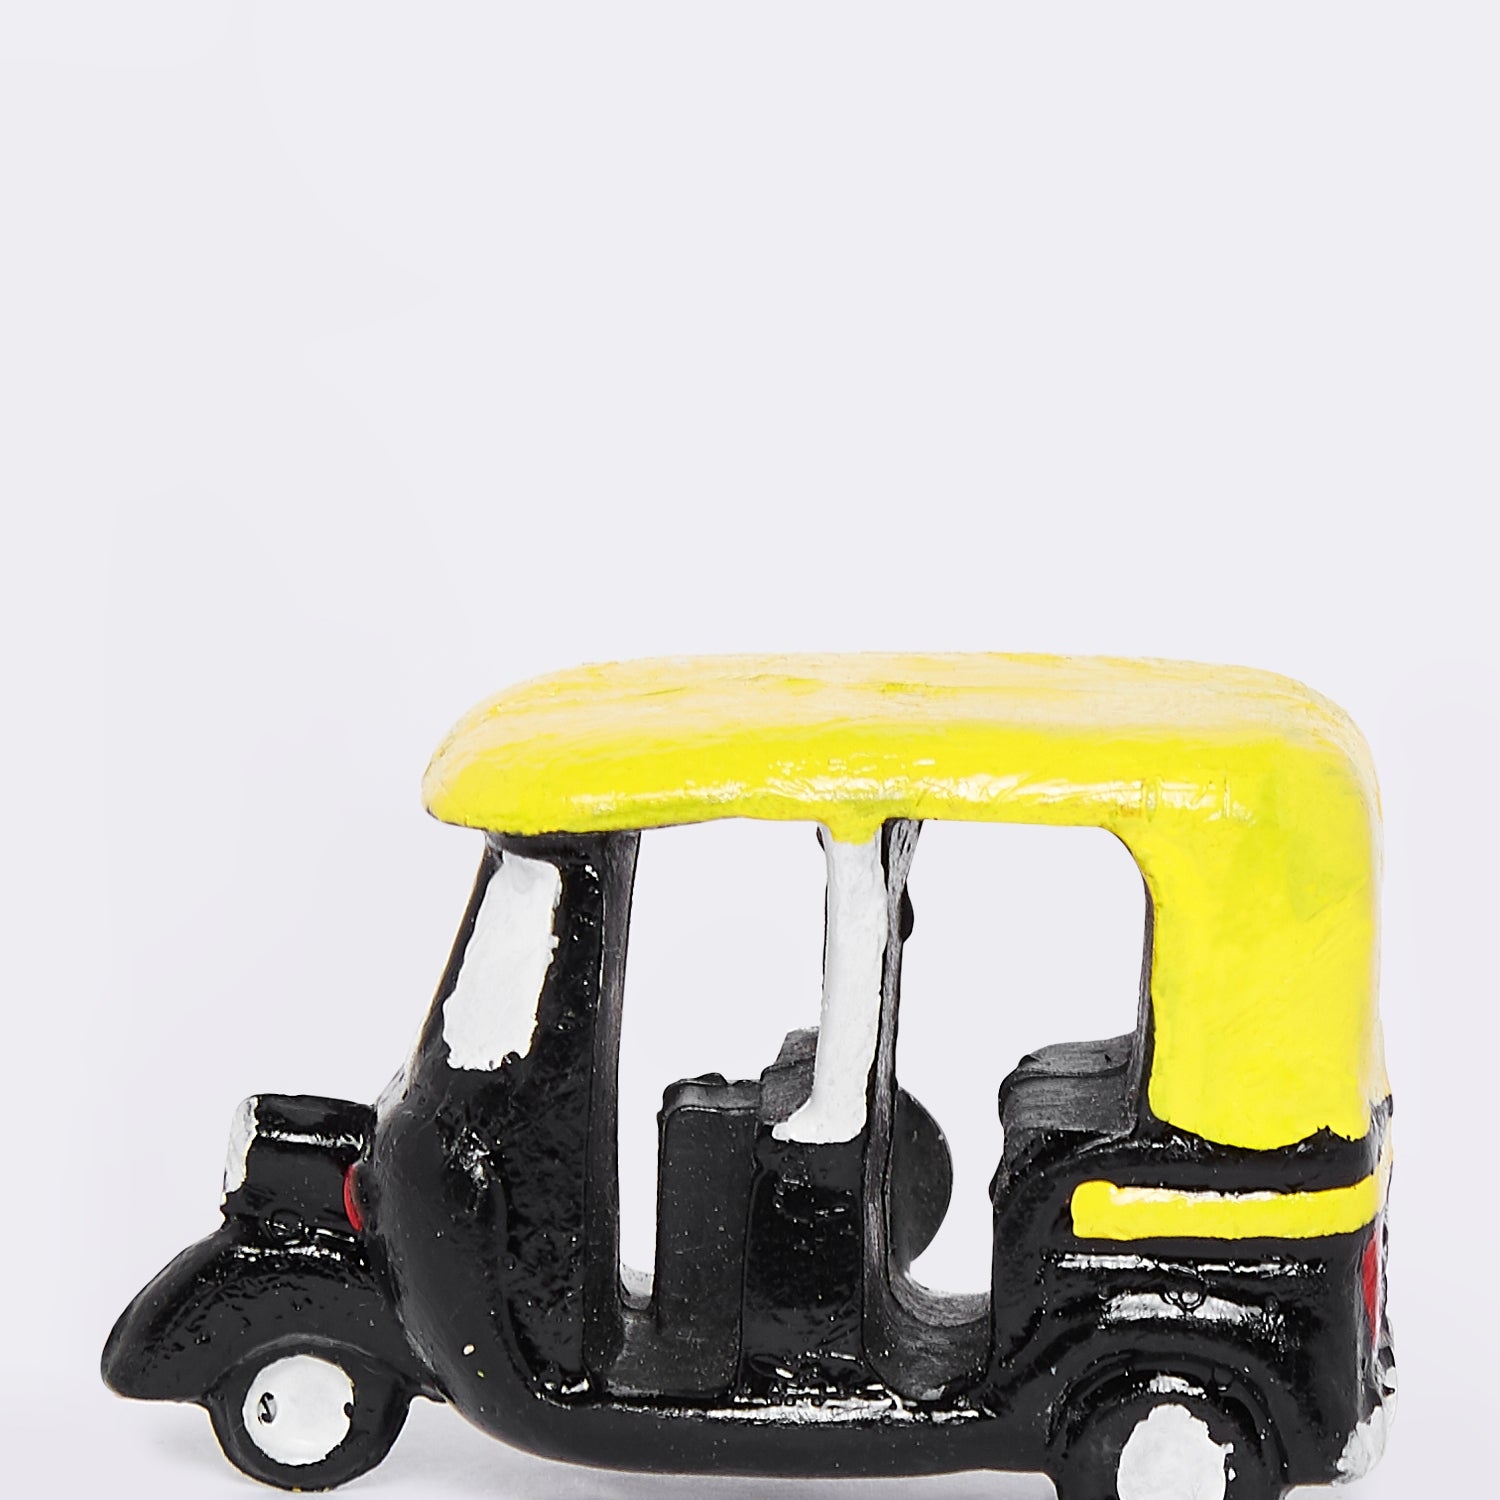 The Bombay Store Auto Rickshaw Fridge Magnet in Rubber